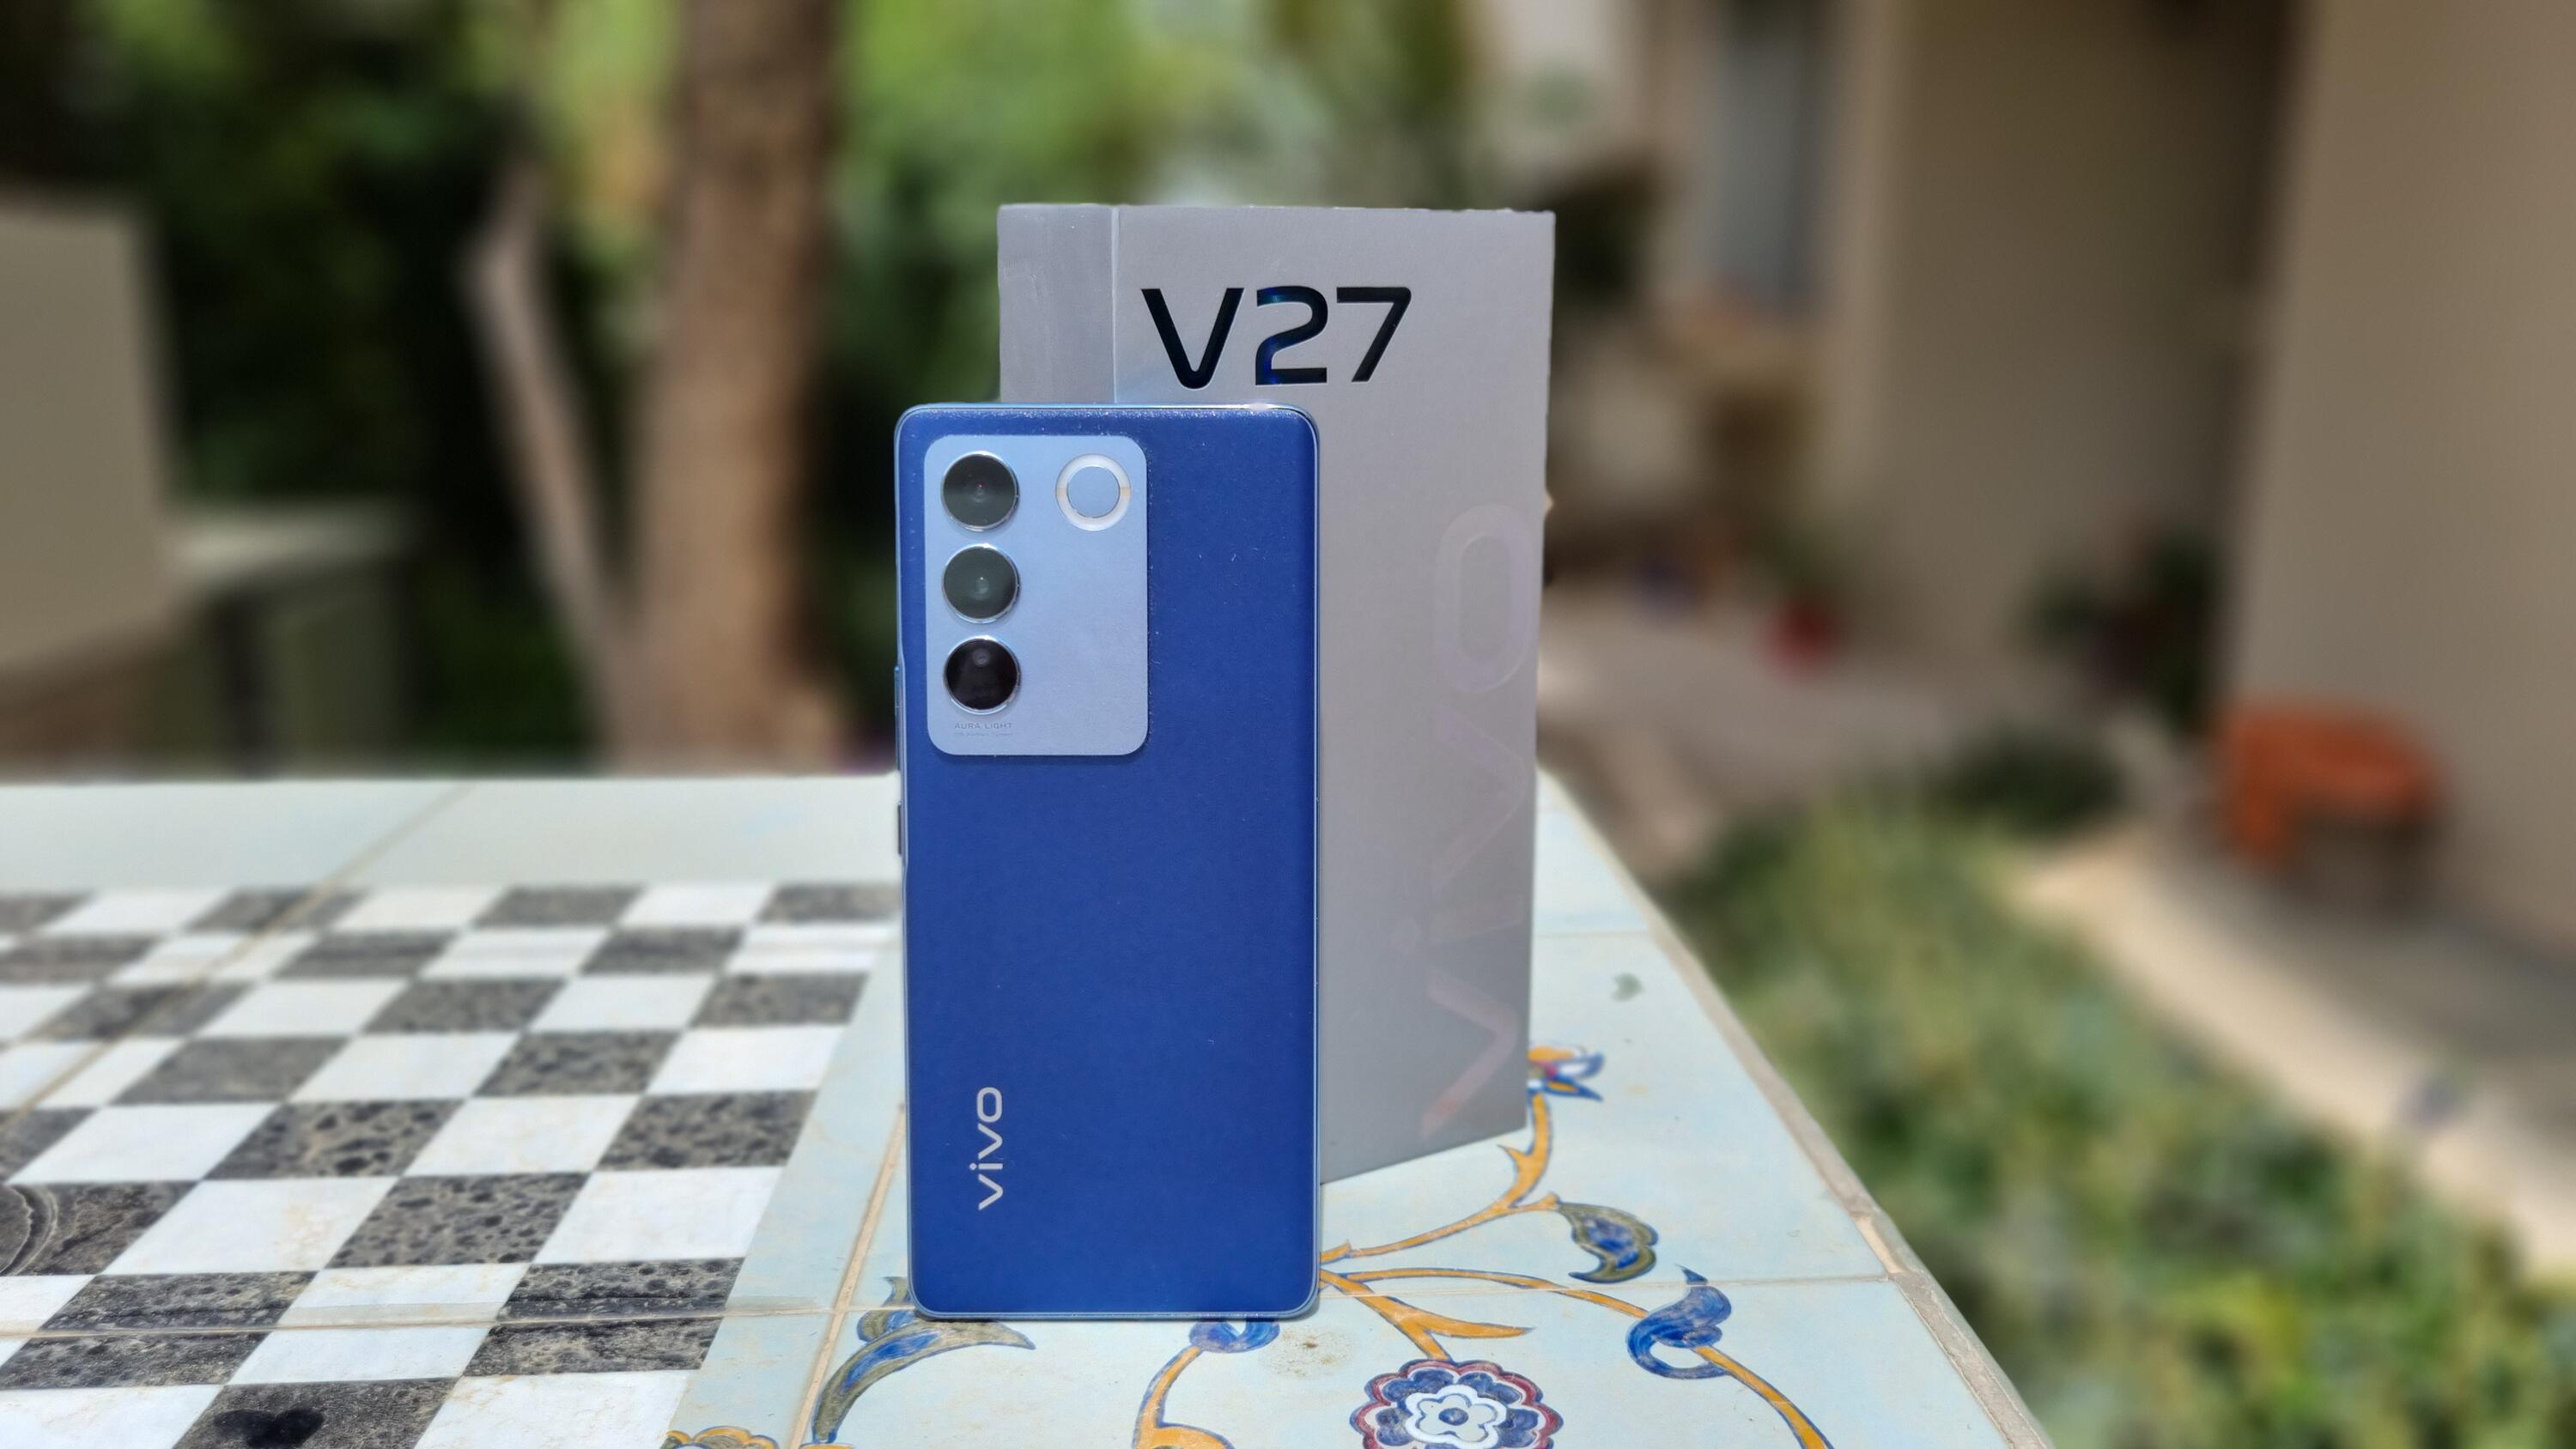 Vivo V23 5G -  External Reviews